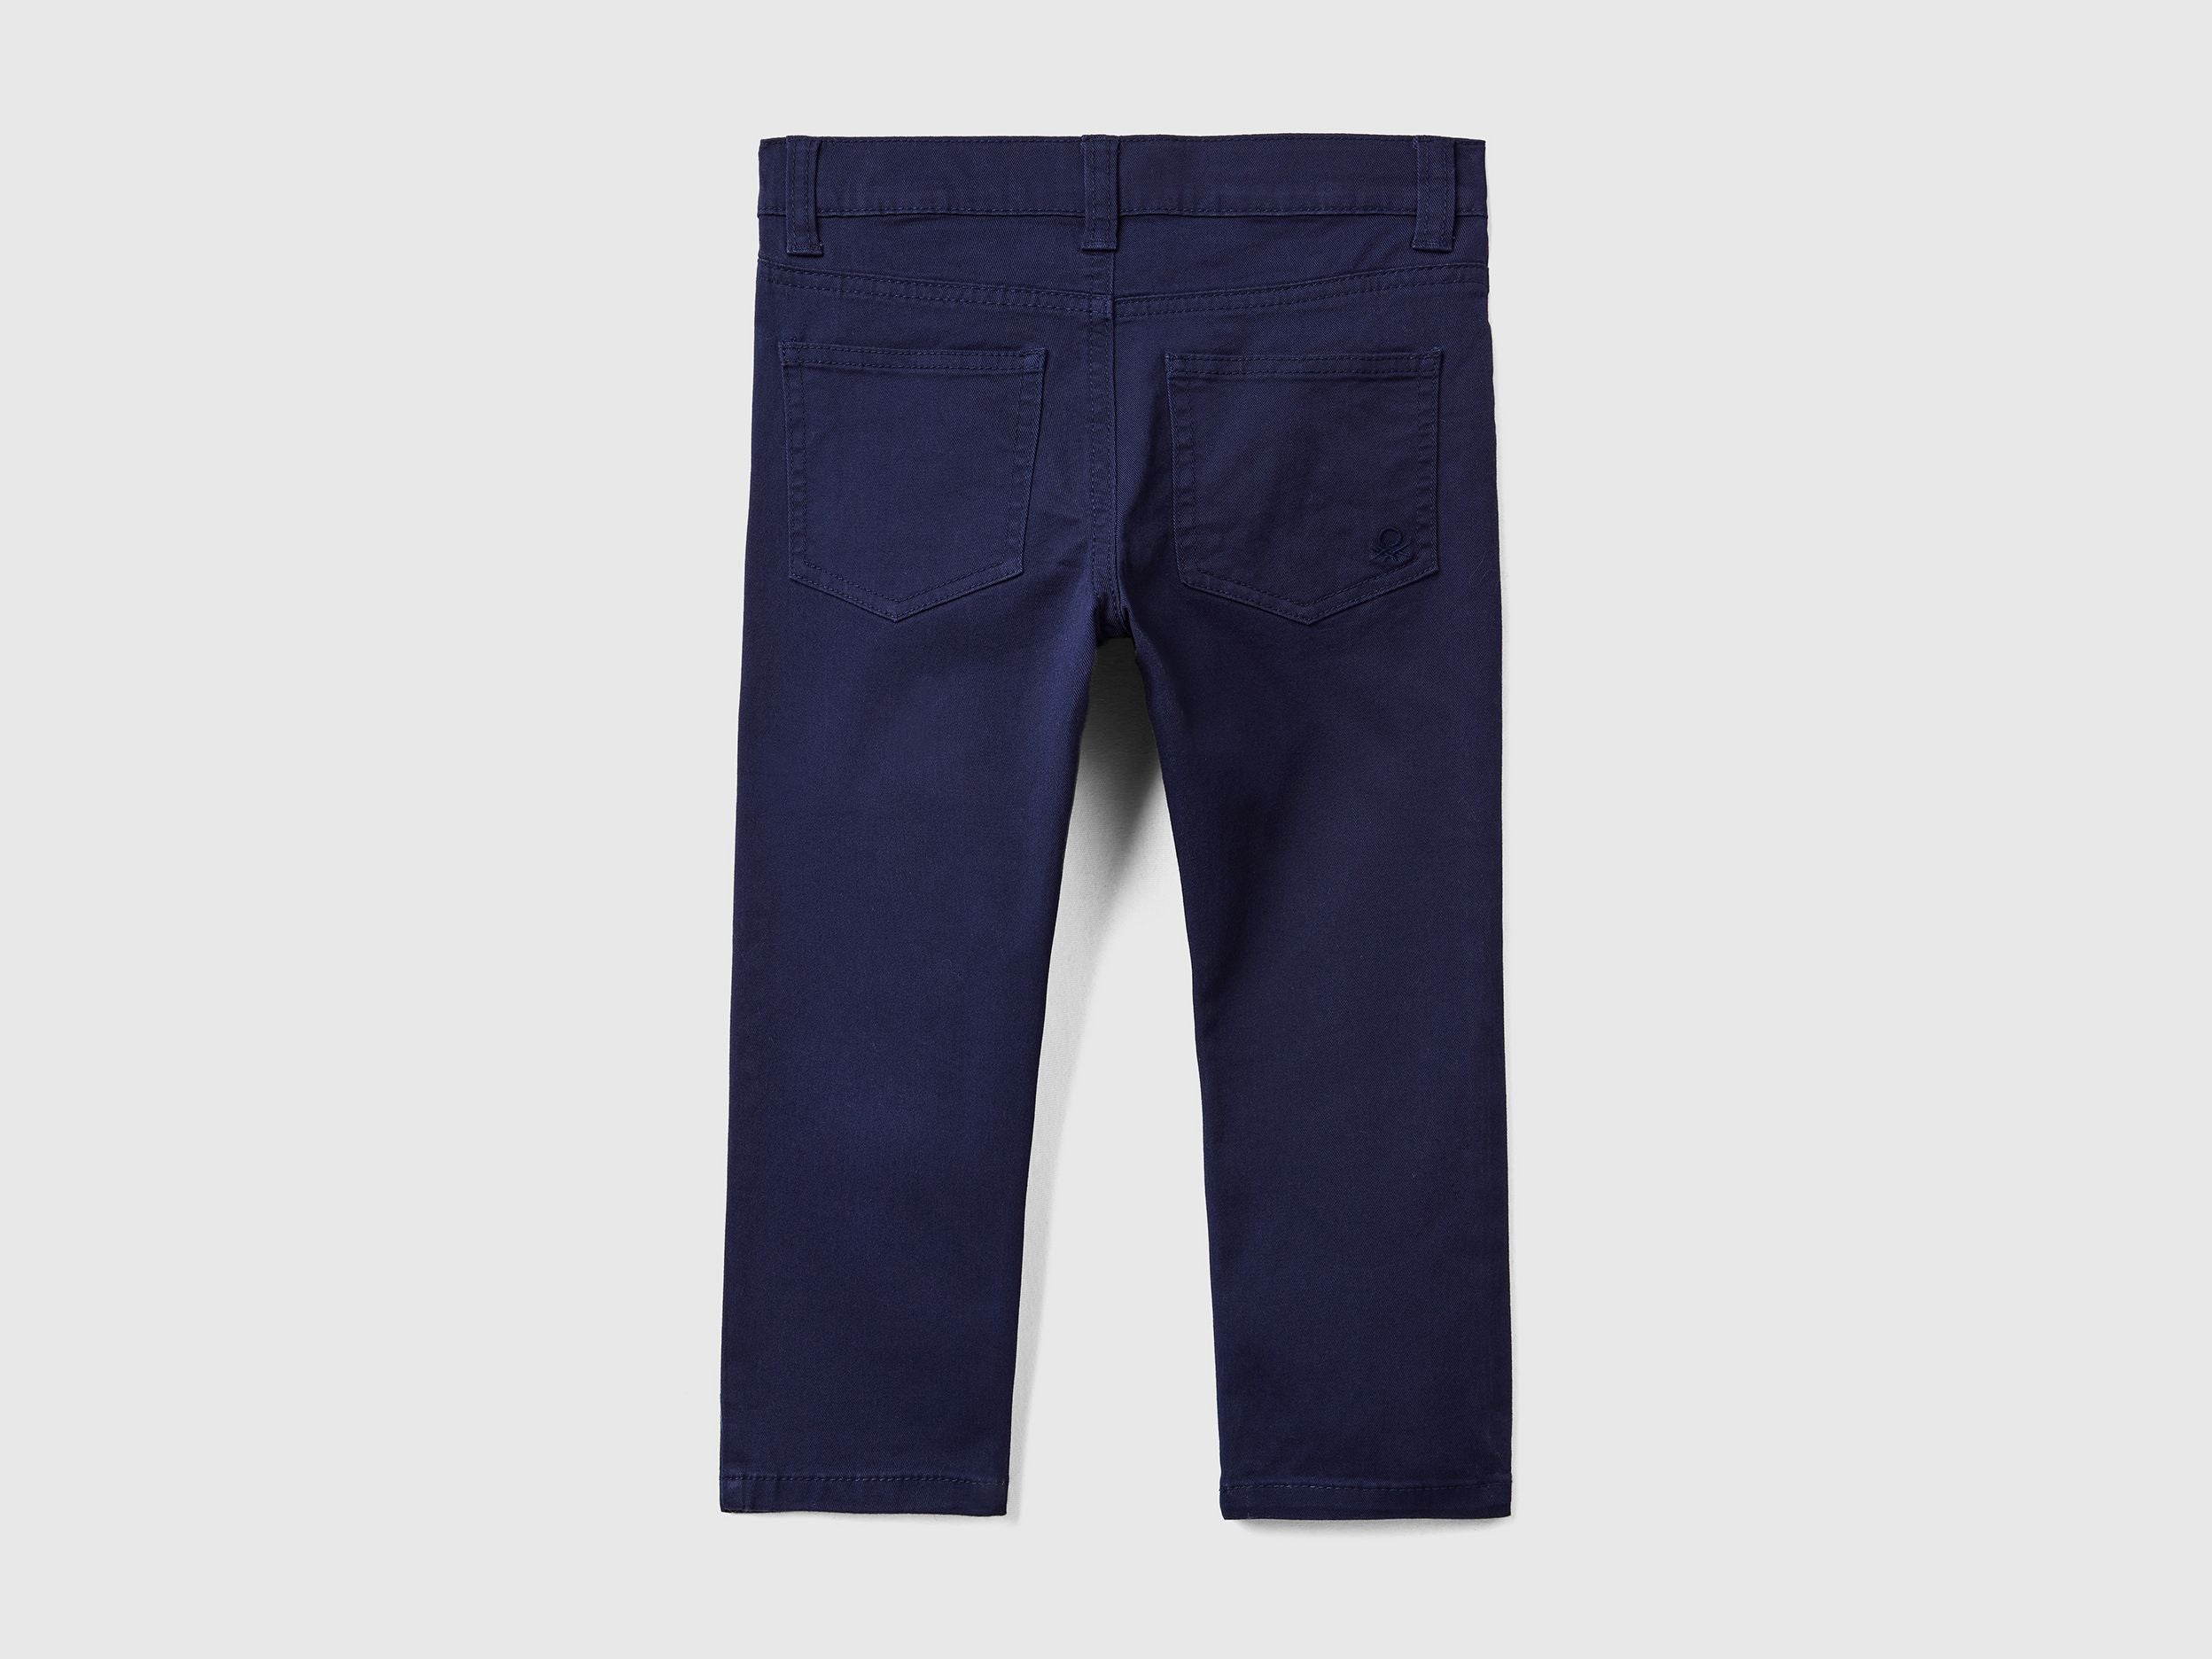 Five-pocket slim fit trousers